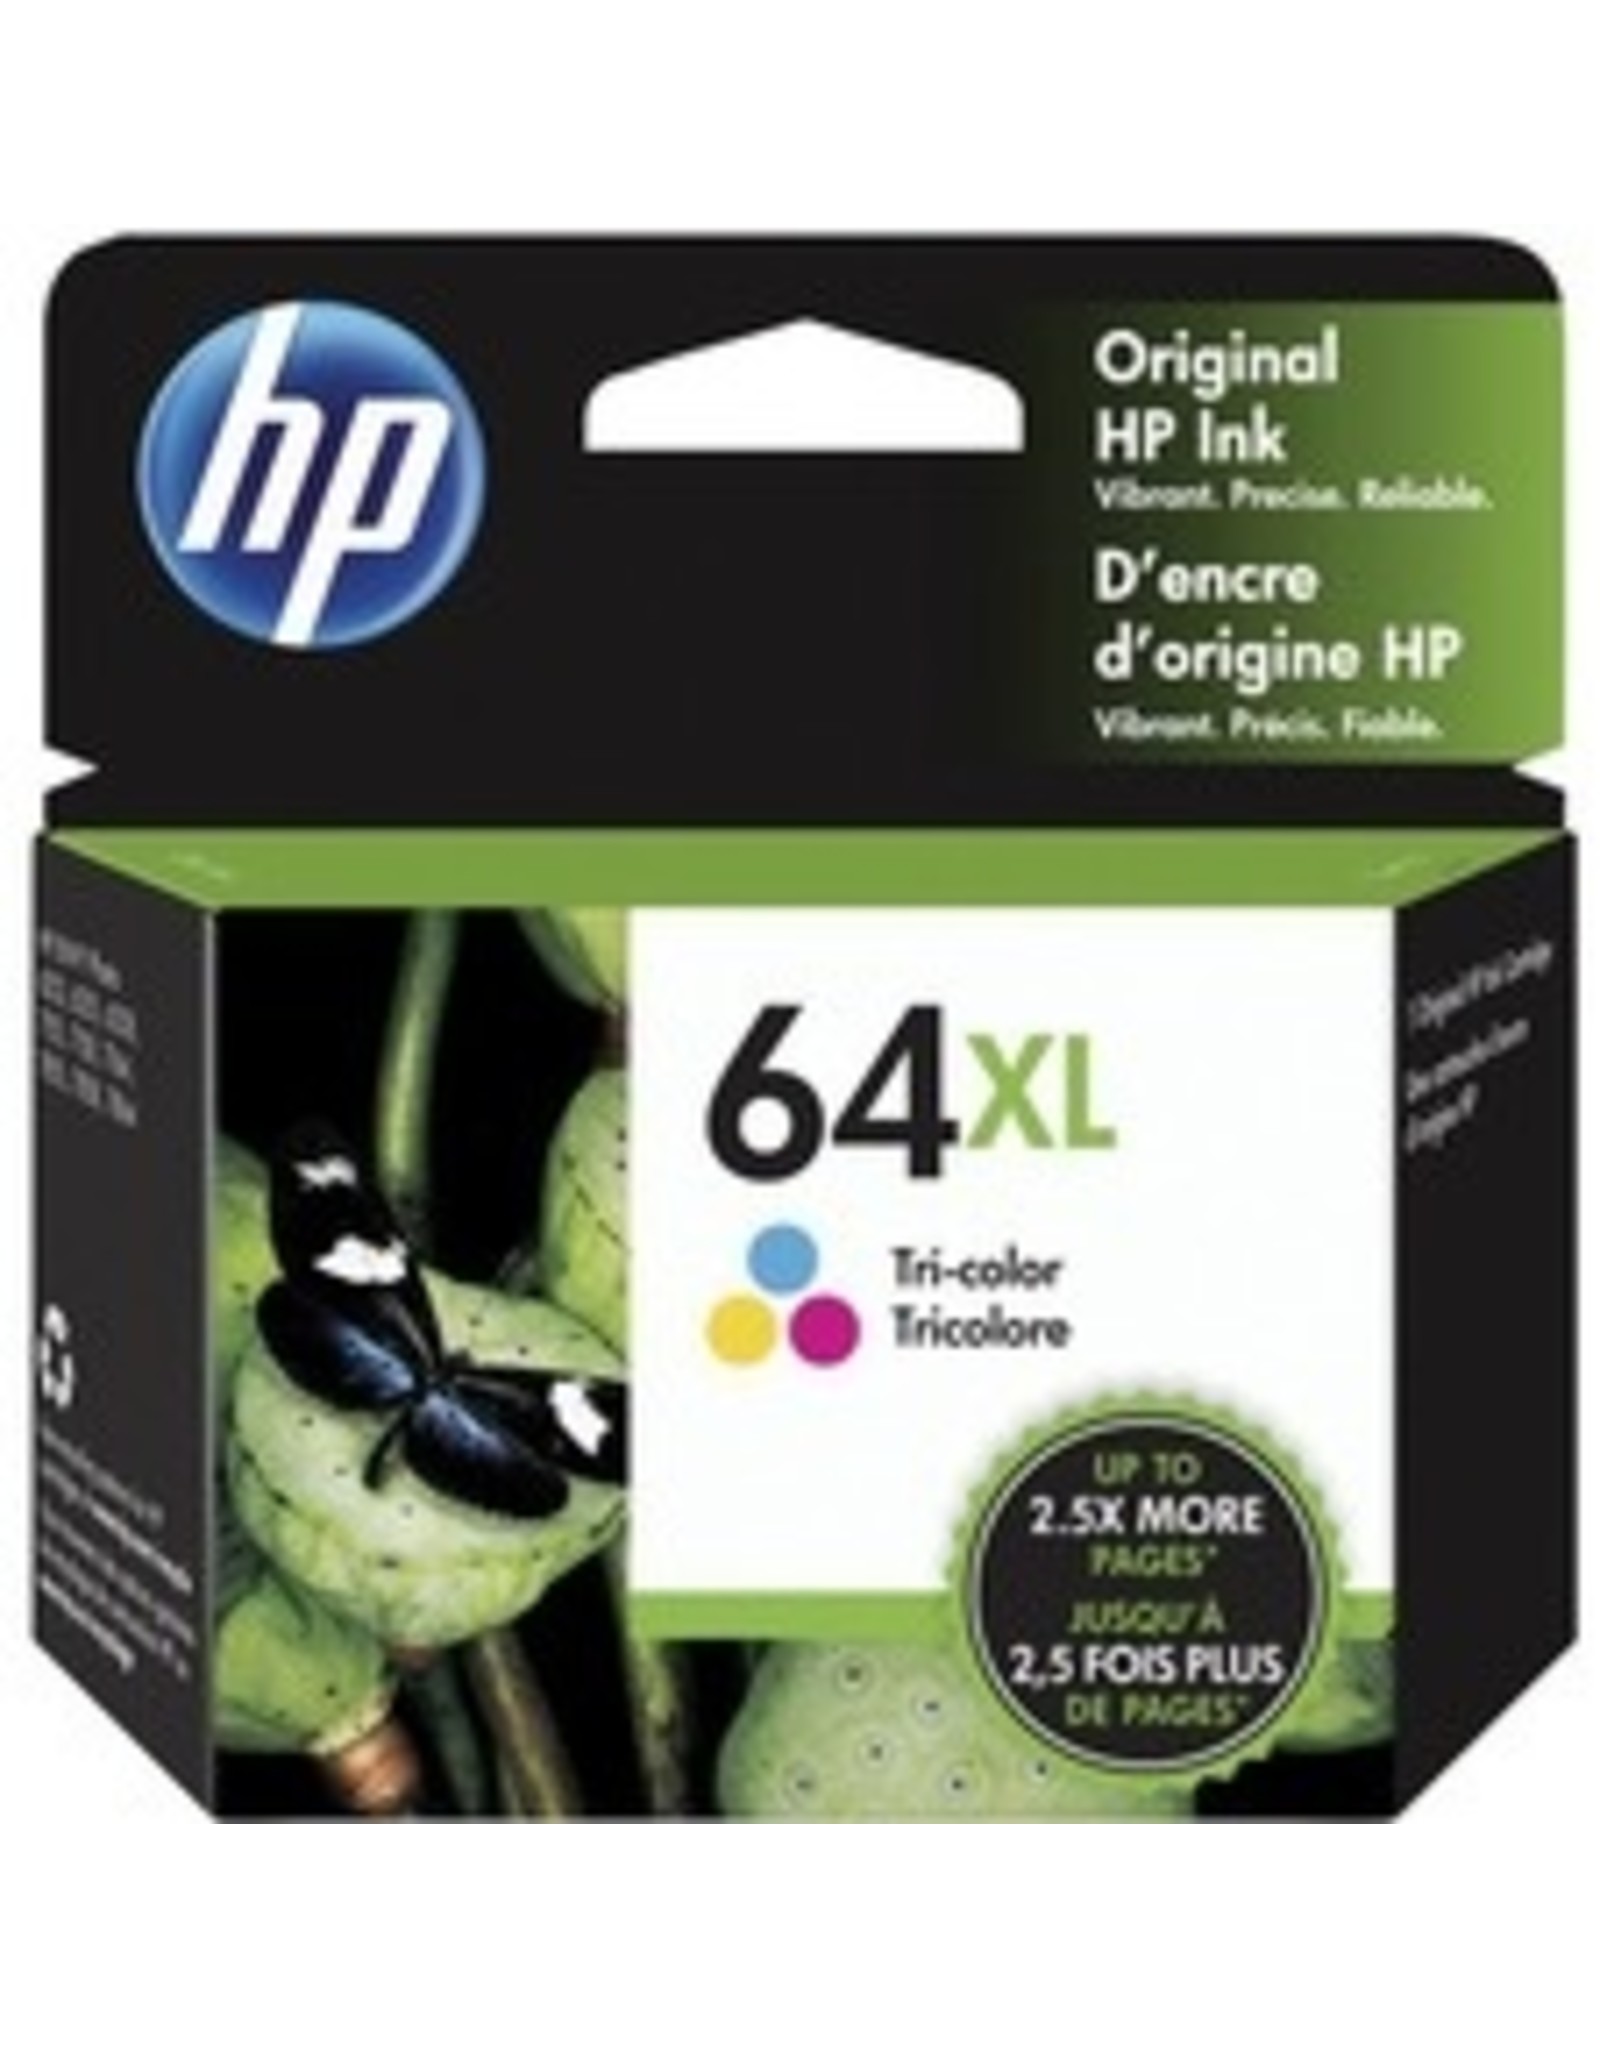 HP HP 64XL Original Ink Cartridge - Tri-color